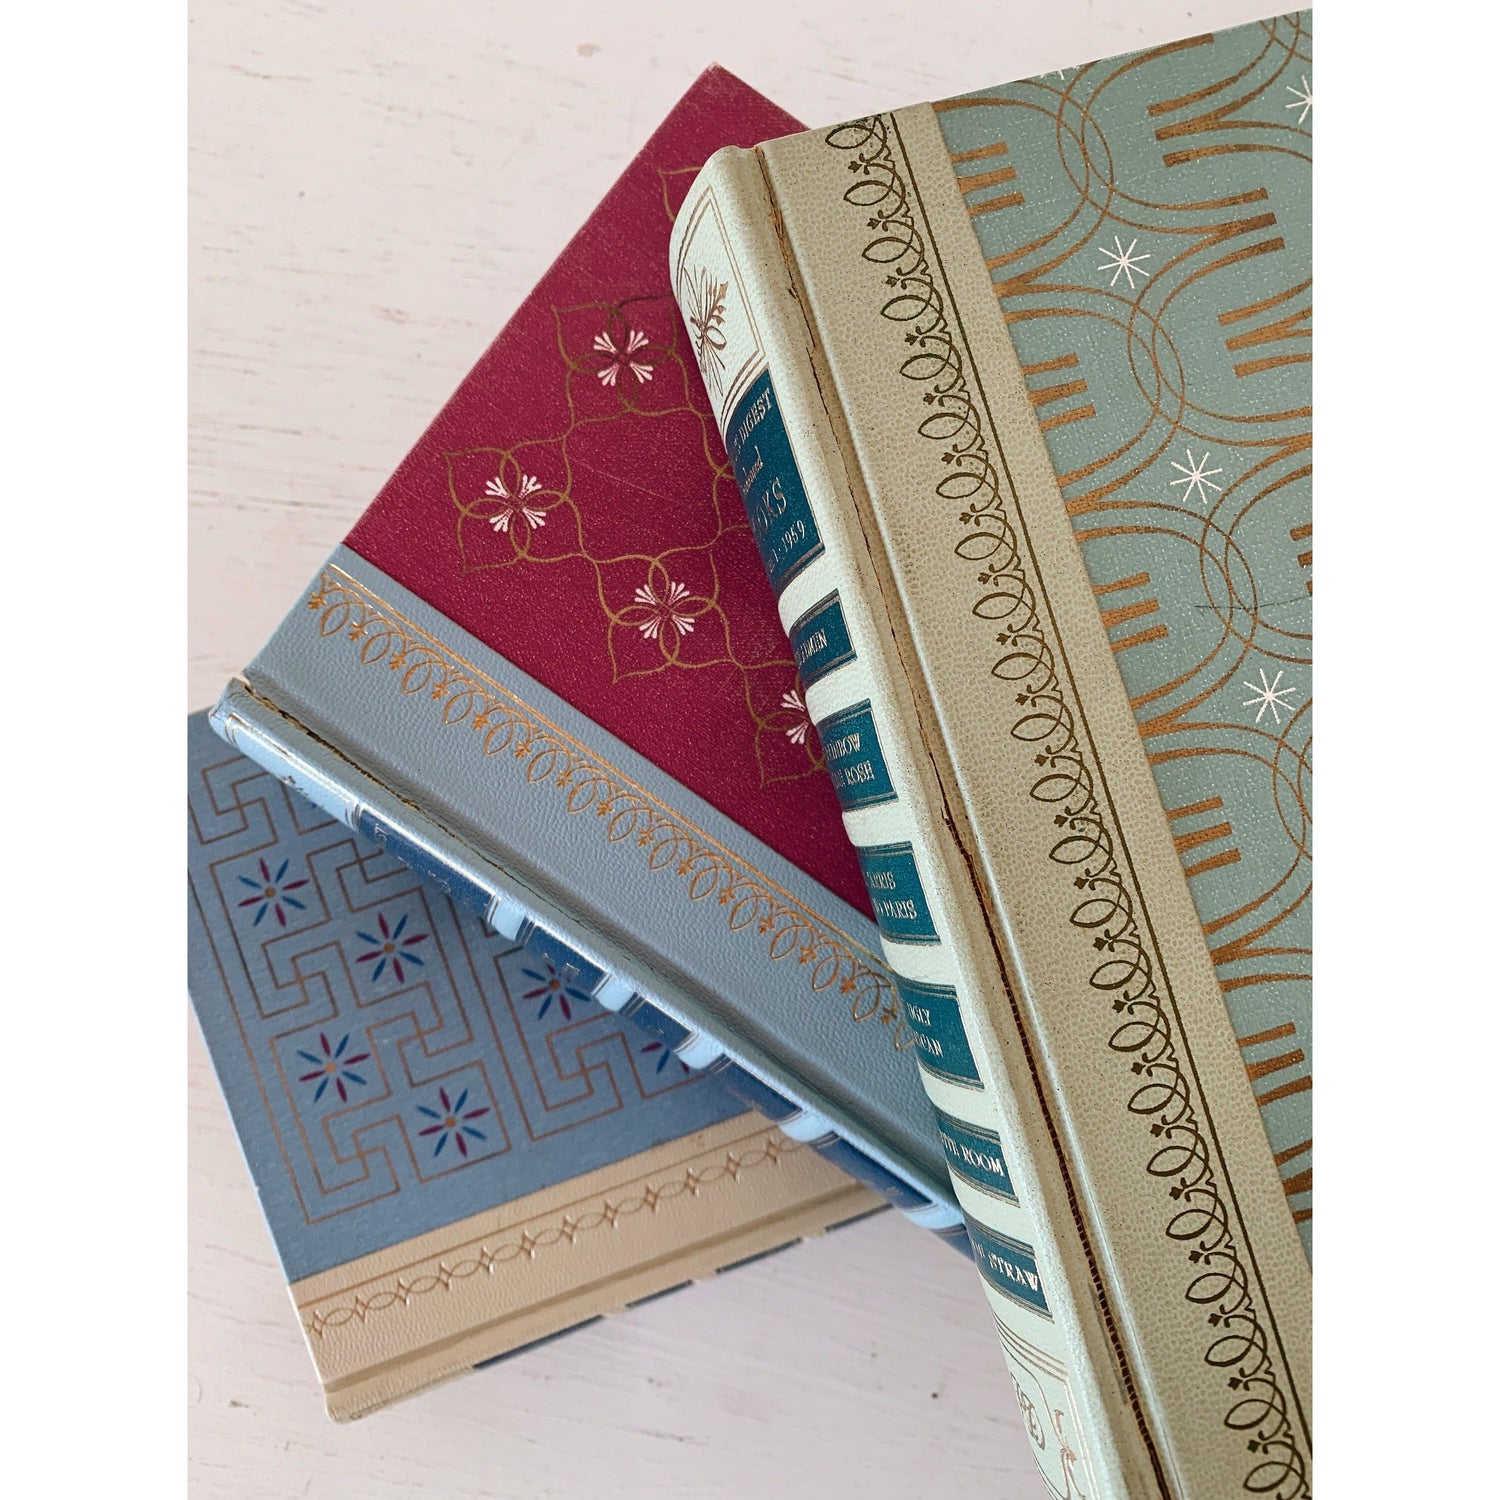 Decorative Books, Mid-Century Modern Bookshelf Decor, Vintage Book Set, Reader's Digest Condensed Books